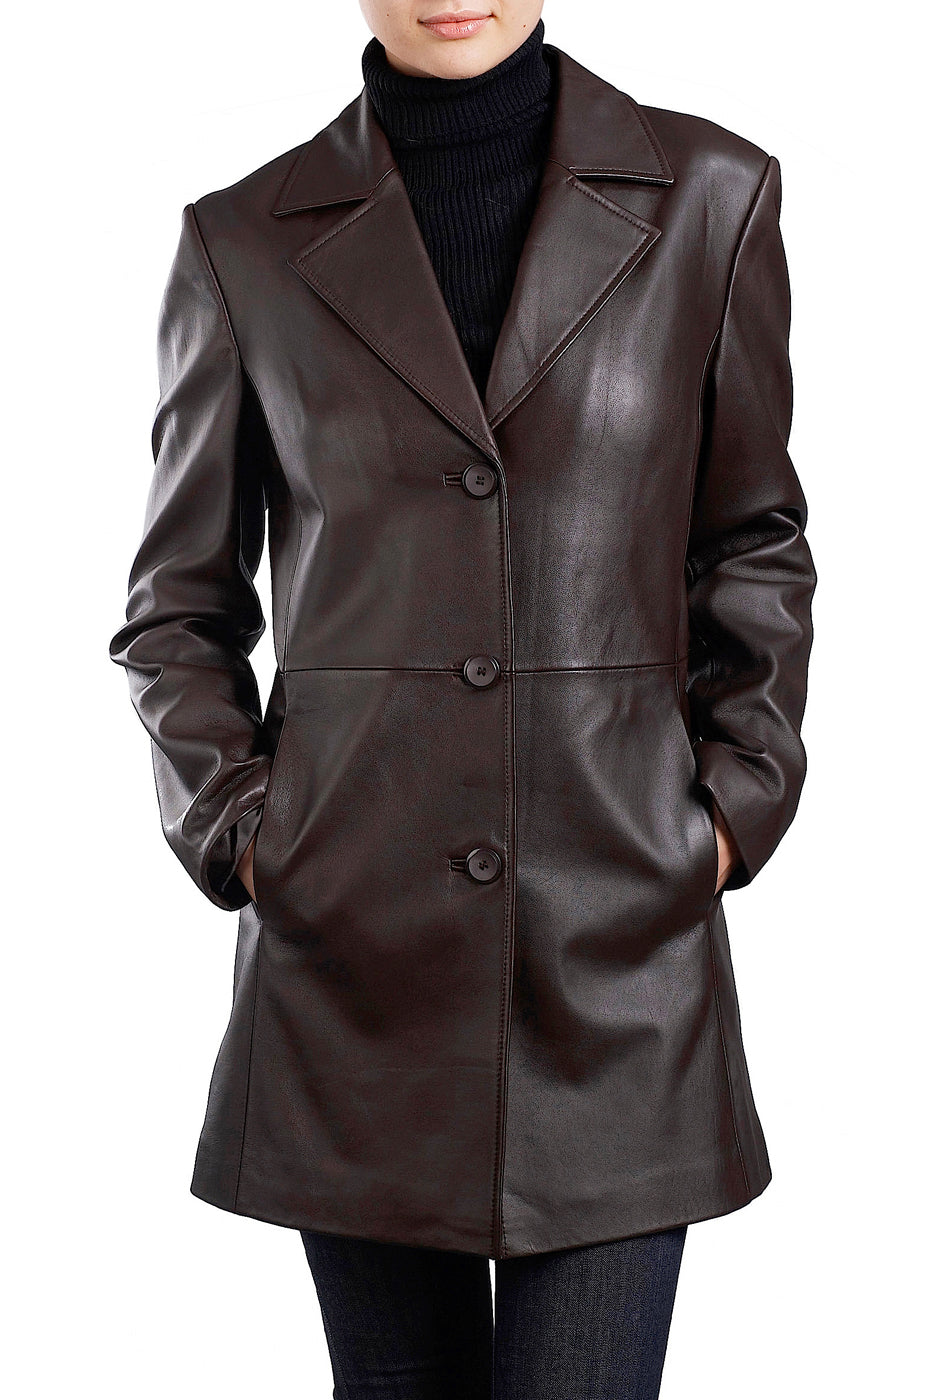 bgsd womens danielle new zealand lambskin leather walking coat 1